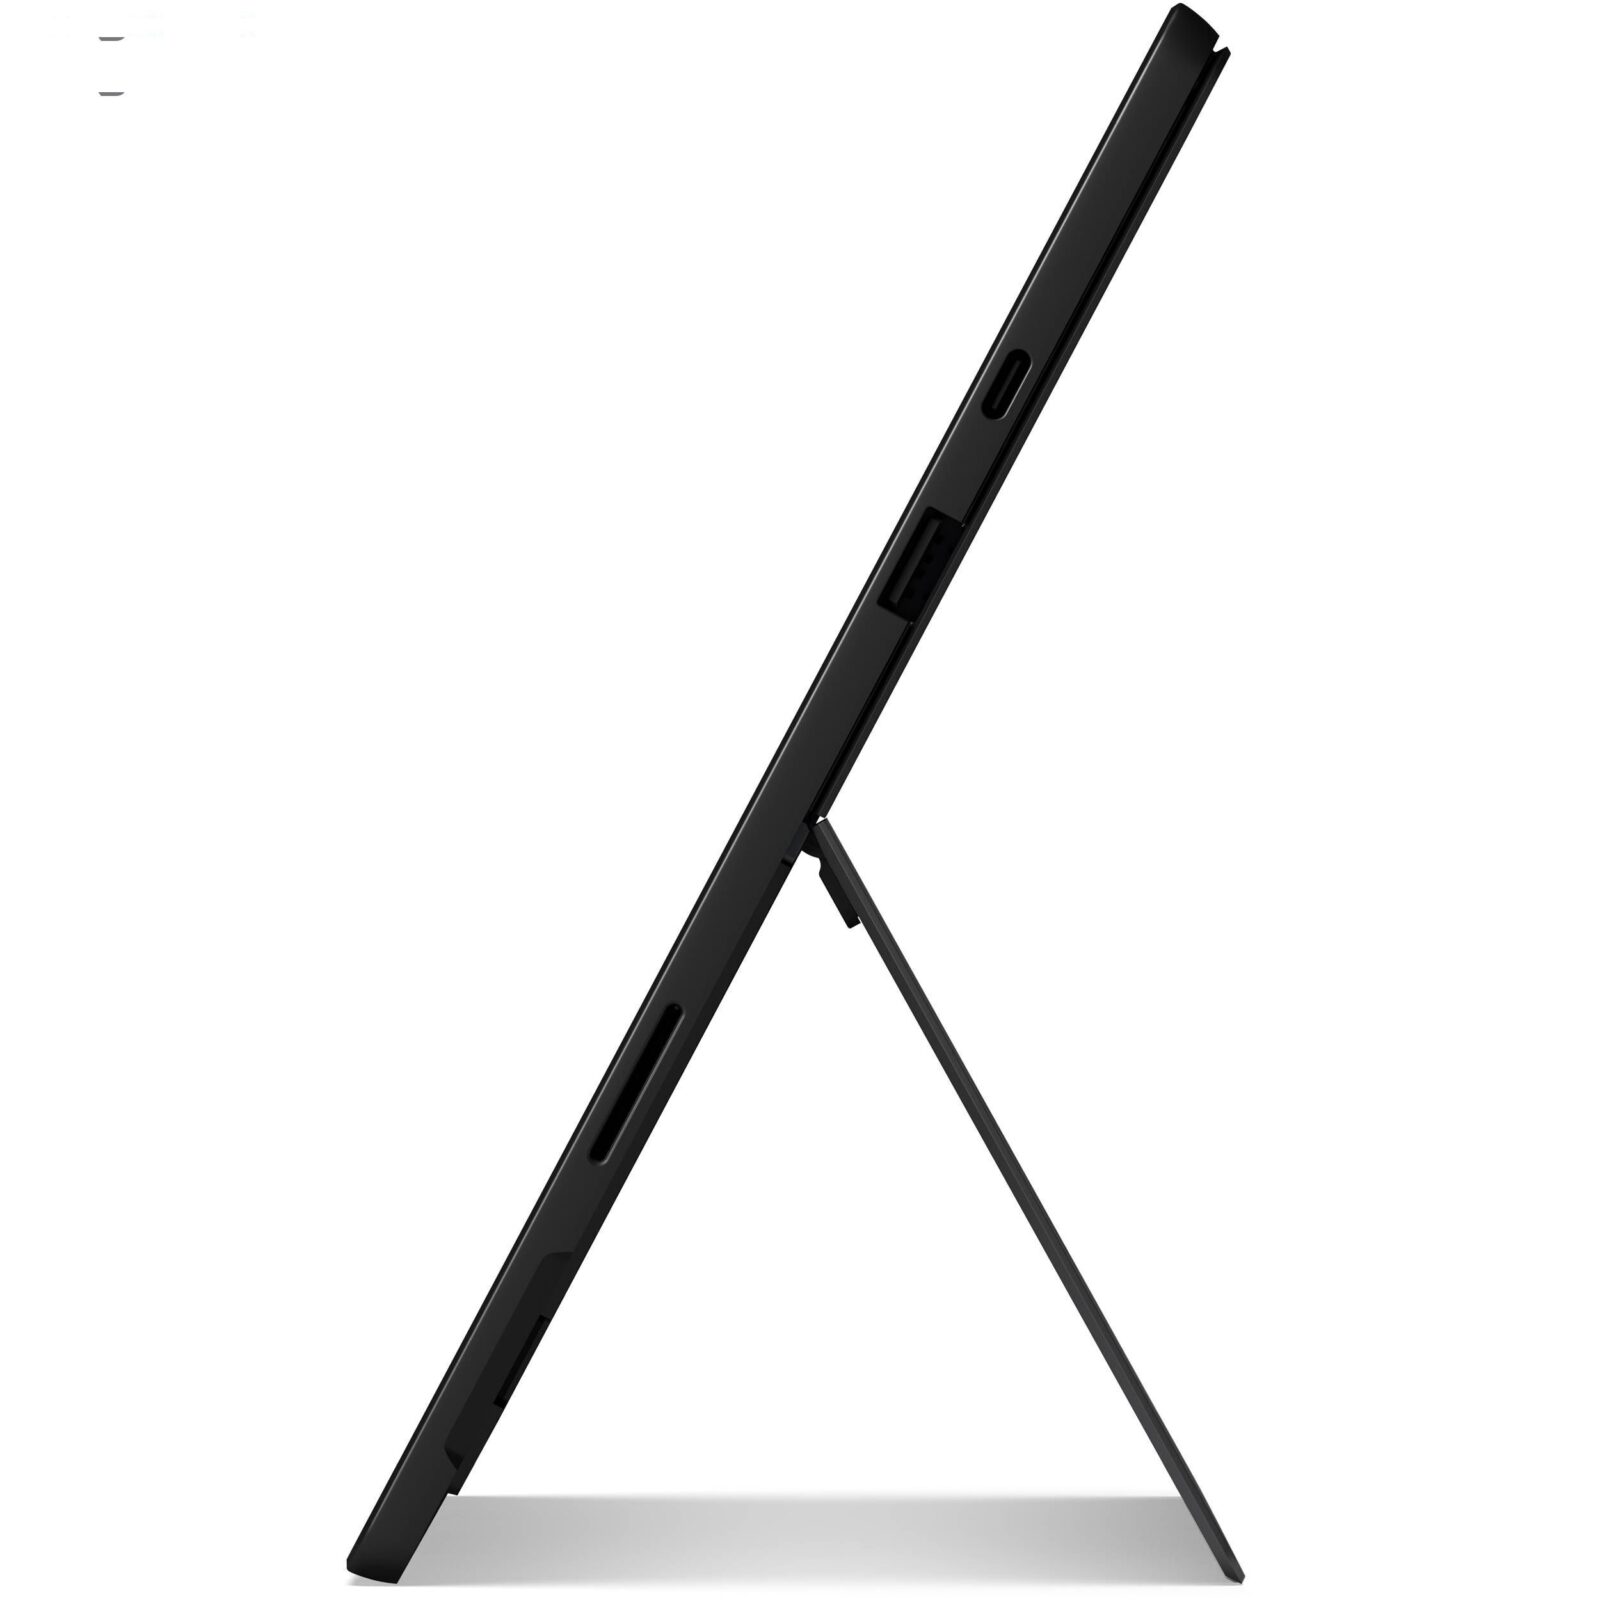 تبلت مایکروسافت مدل Surface Pro 7 – C به همراه کیبورد Black Type Cover